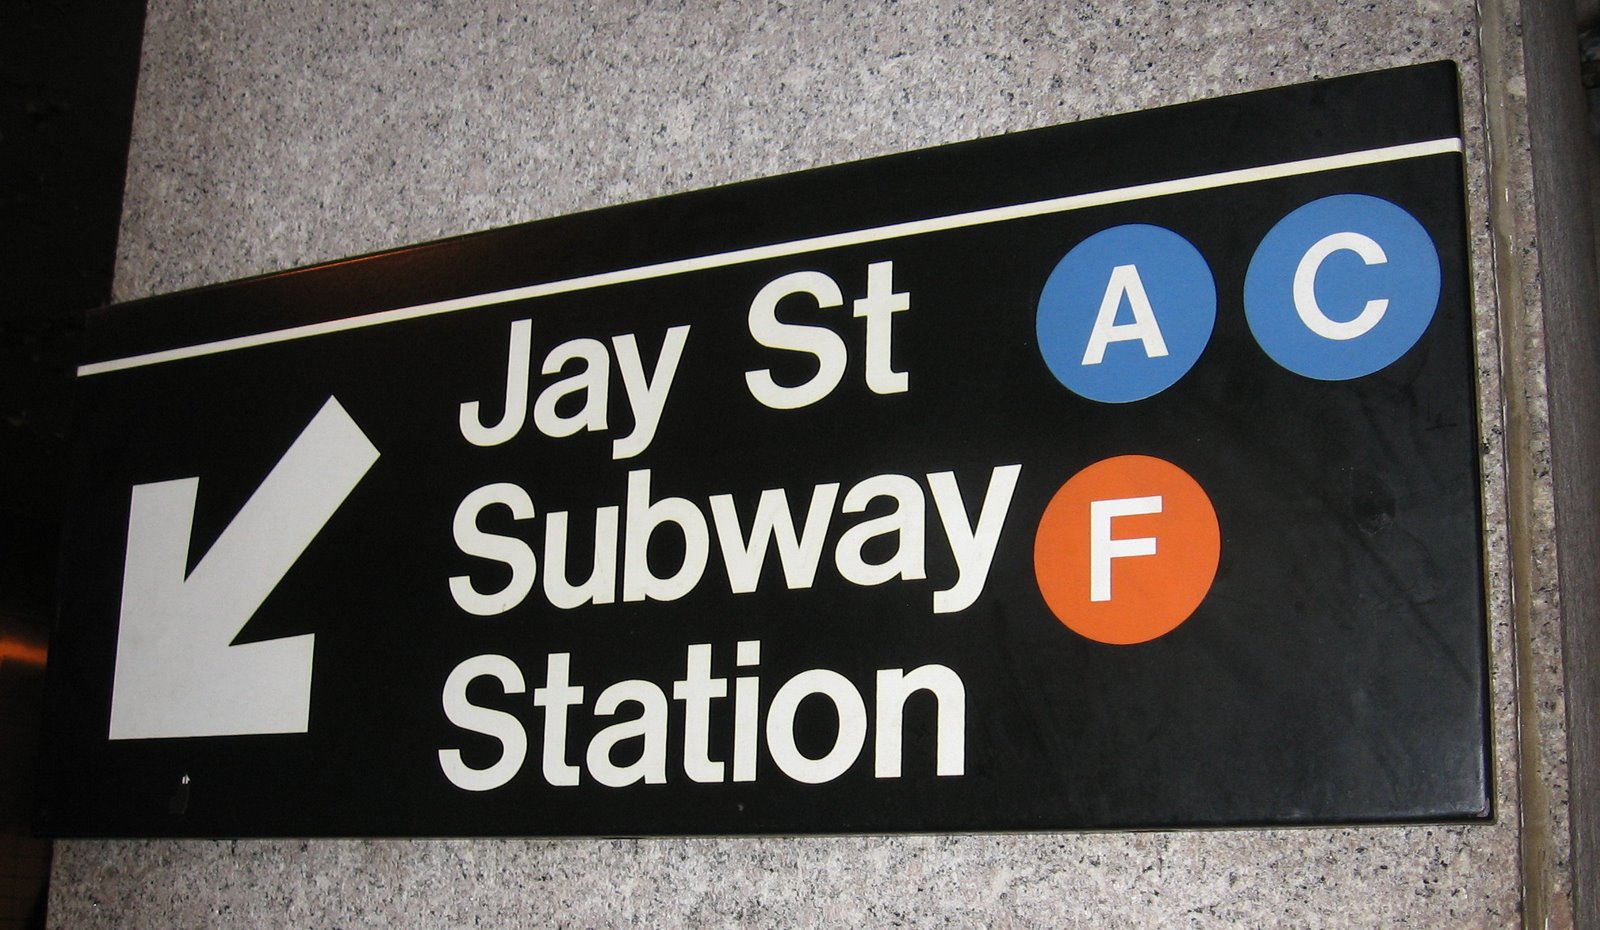 [_jay_st_subway_sign.jpg]